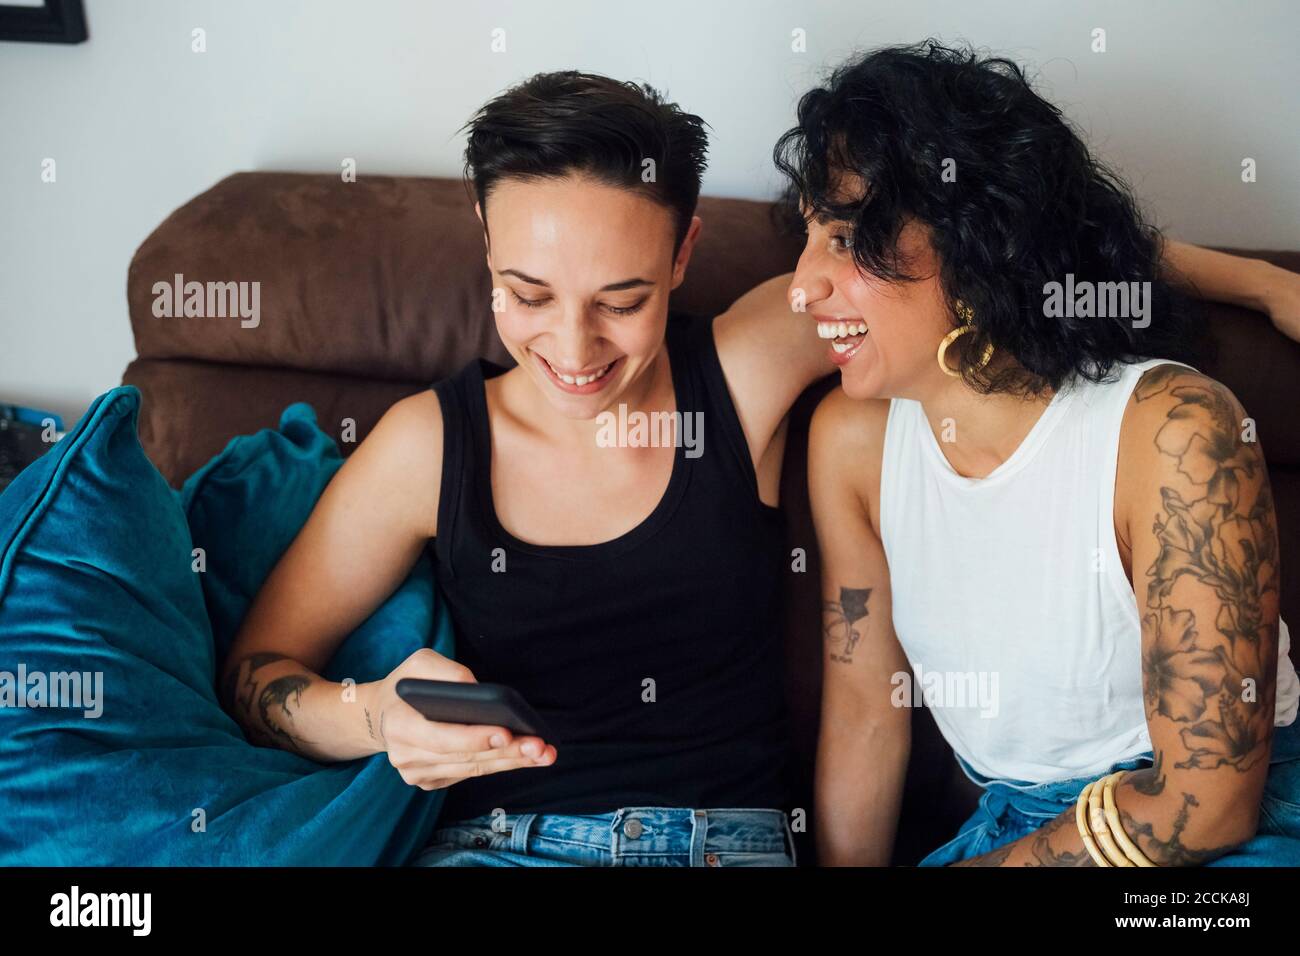 Cheerful woman looking at partner using phone on sofa Stock Photo